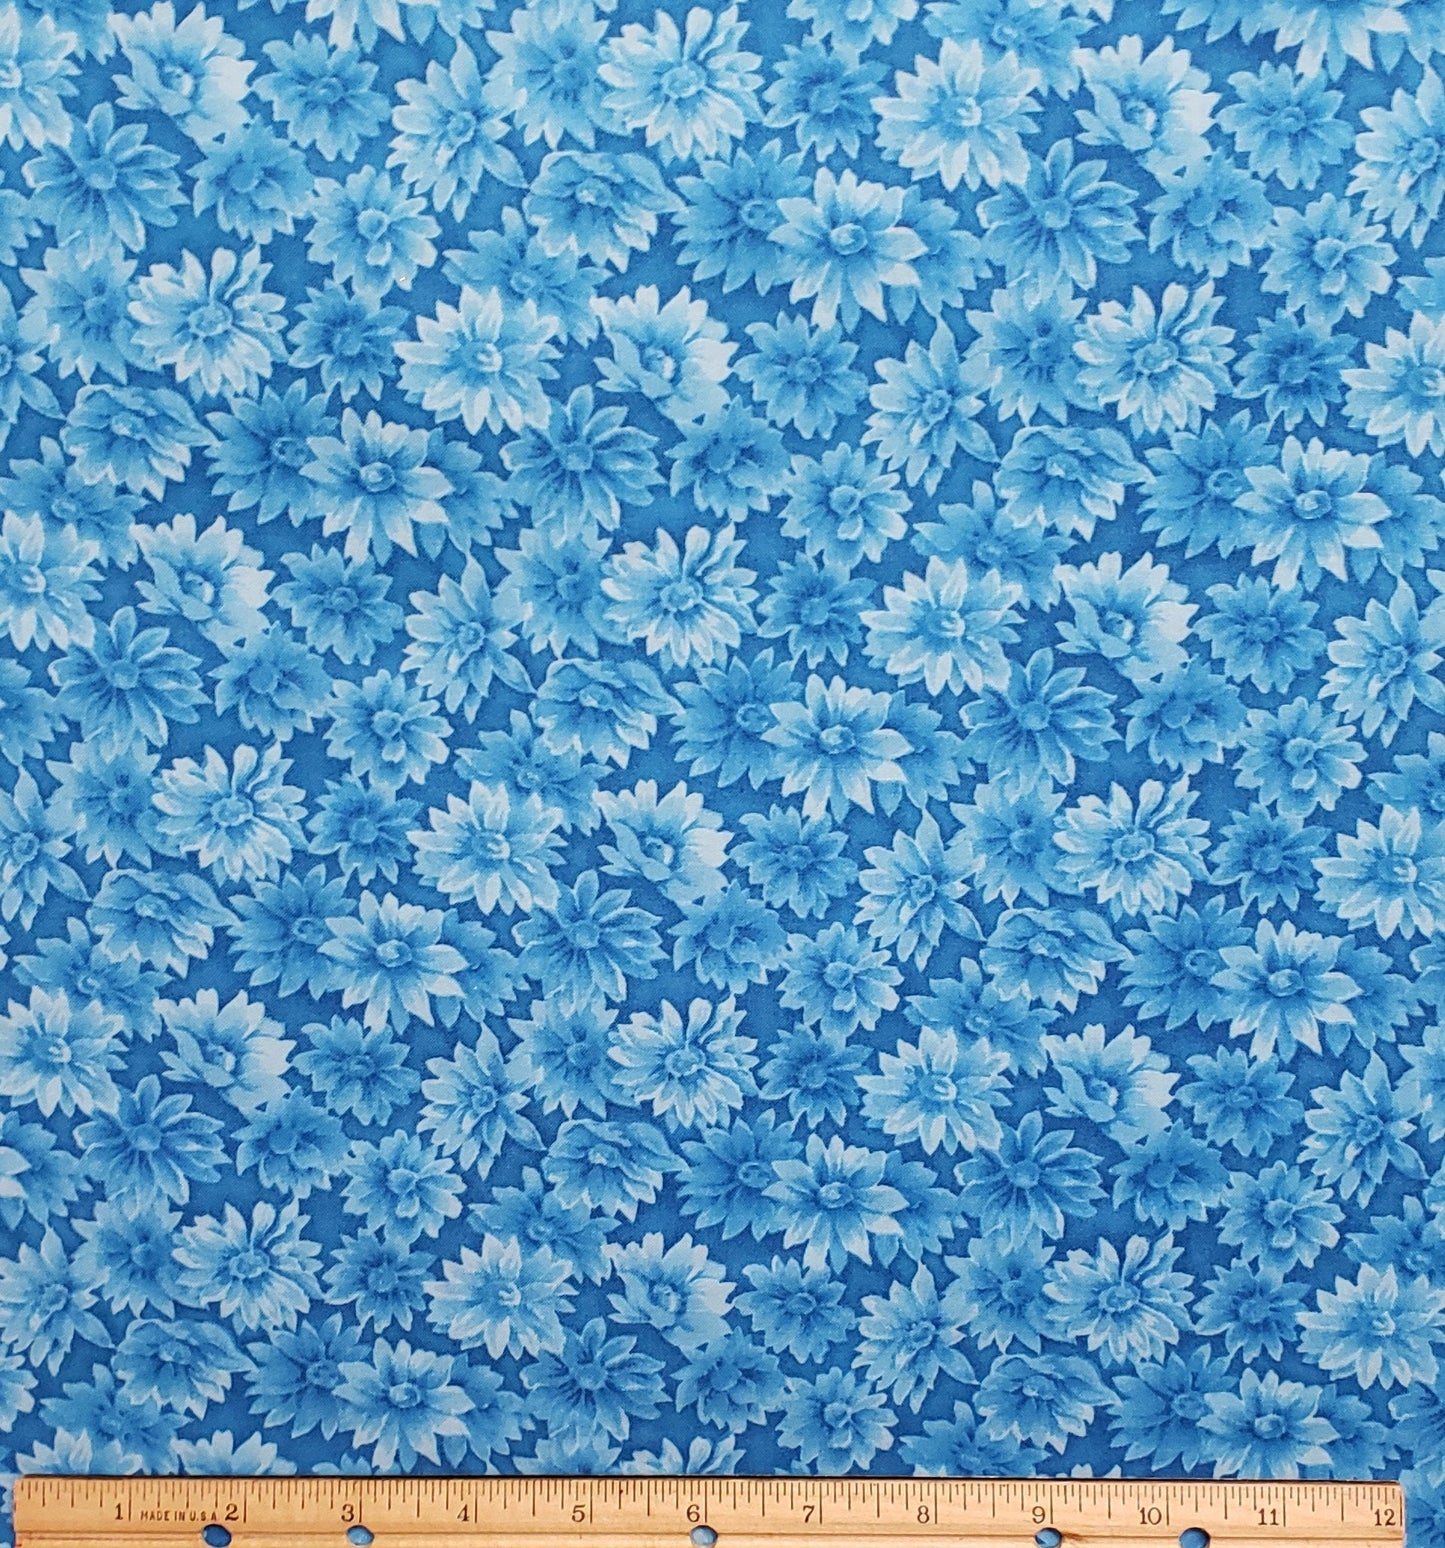 Fabric Traditions 2004 NTT, Inc. - Bright Blue Fabric / Tone-on-Tone Flower Print